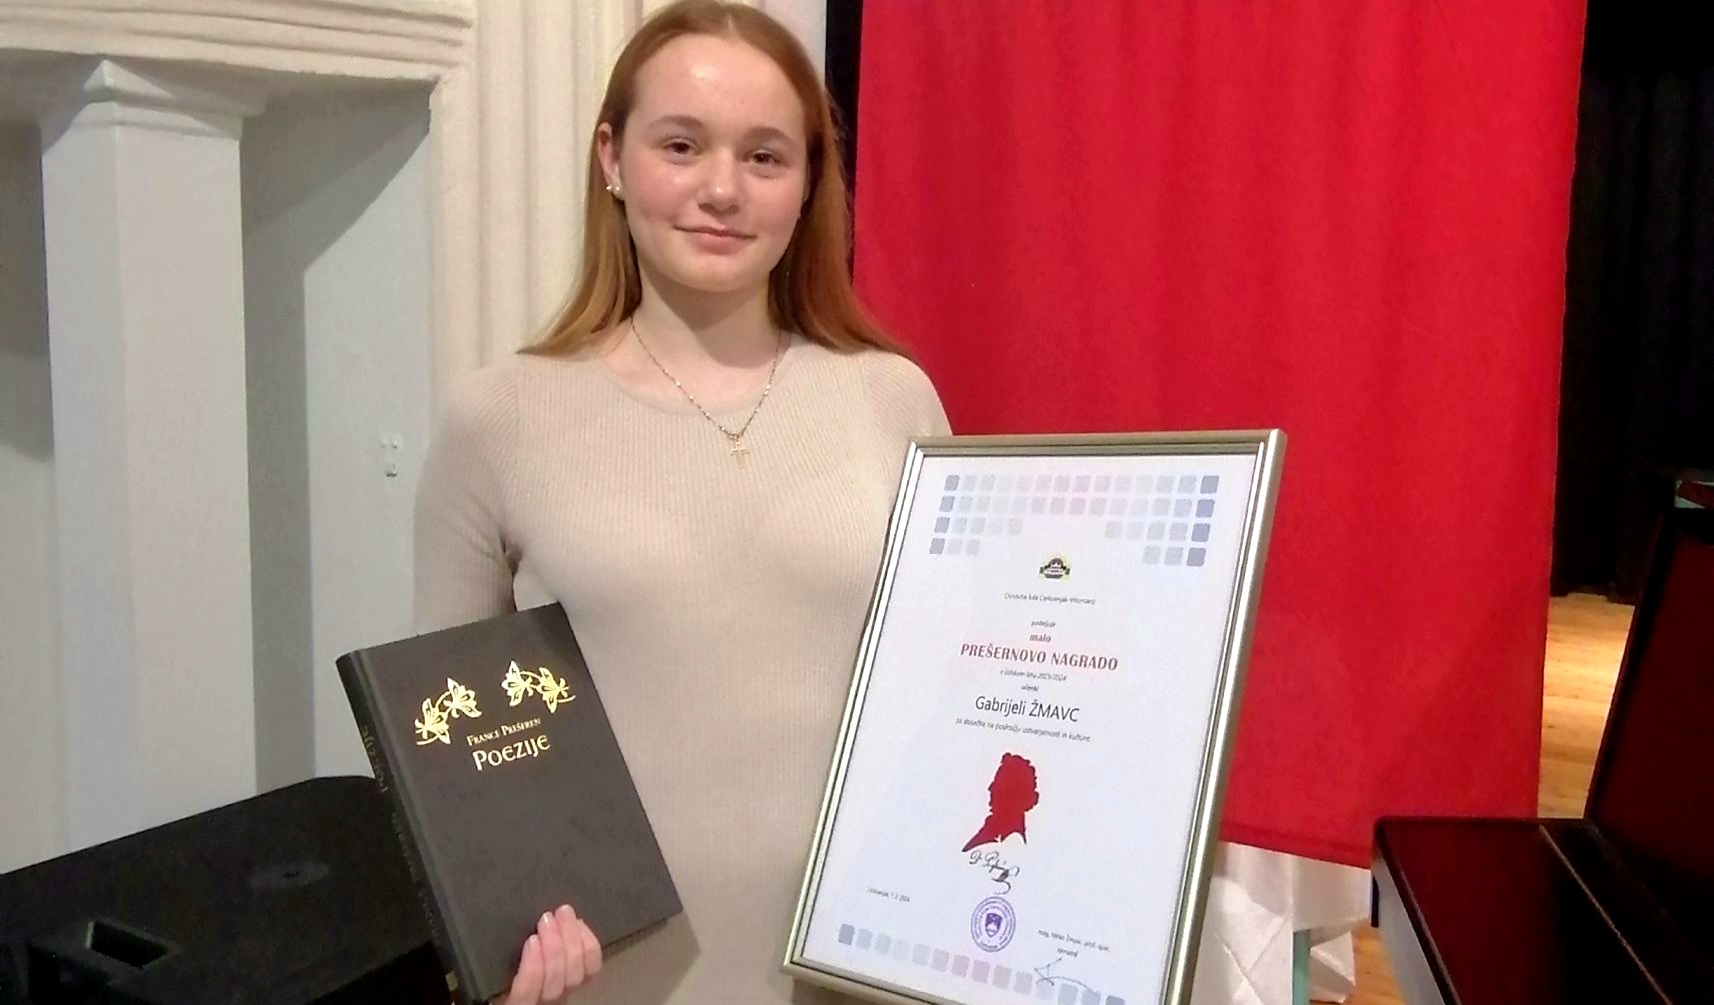 Letošnja mala Prešernova nagrada devetošolki Gabrijeli Žmavc